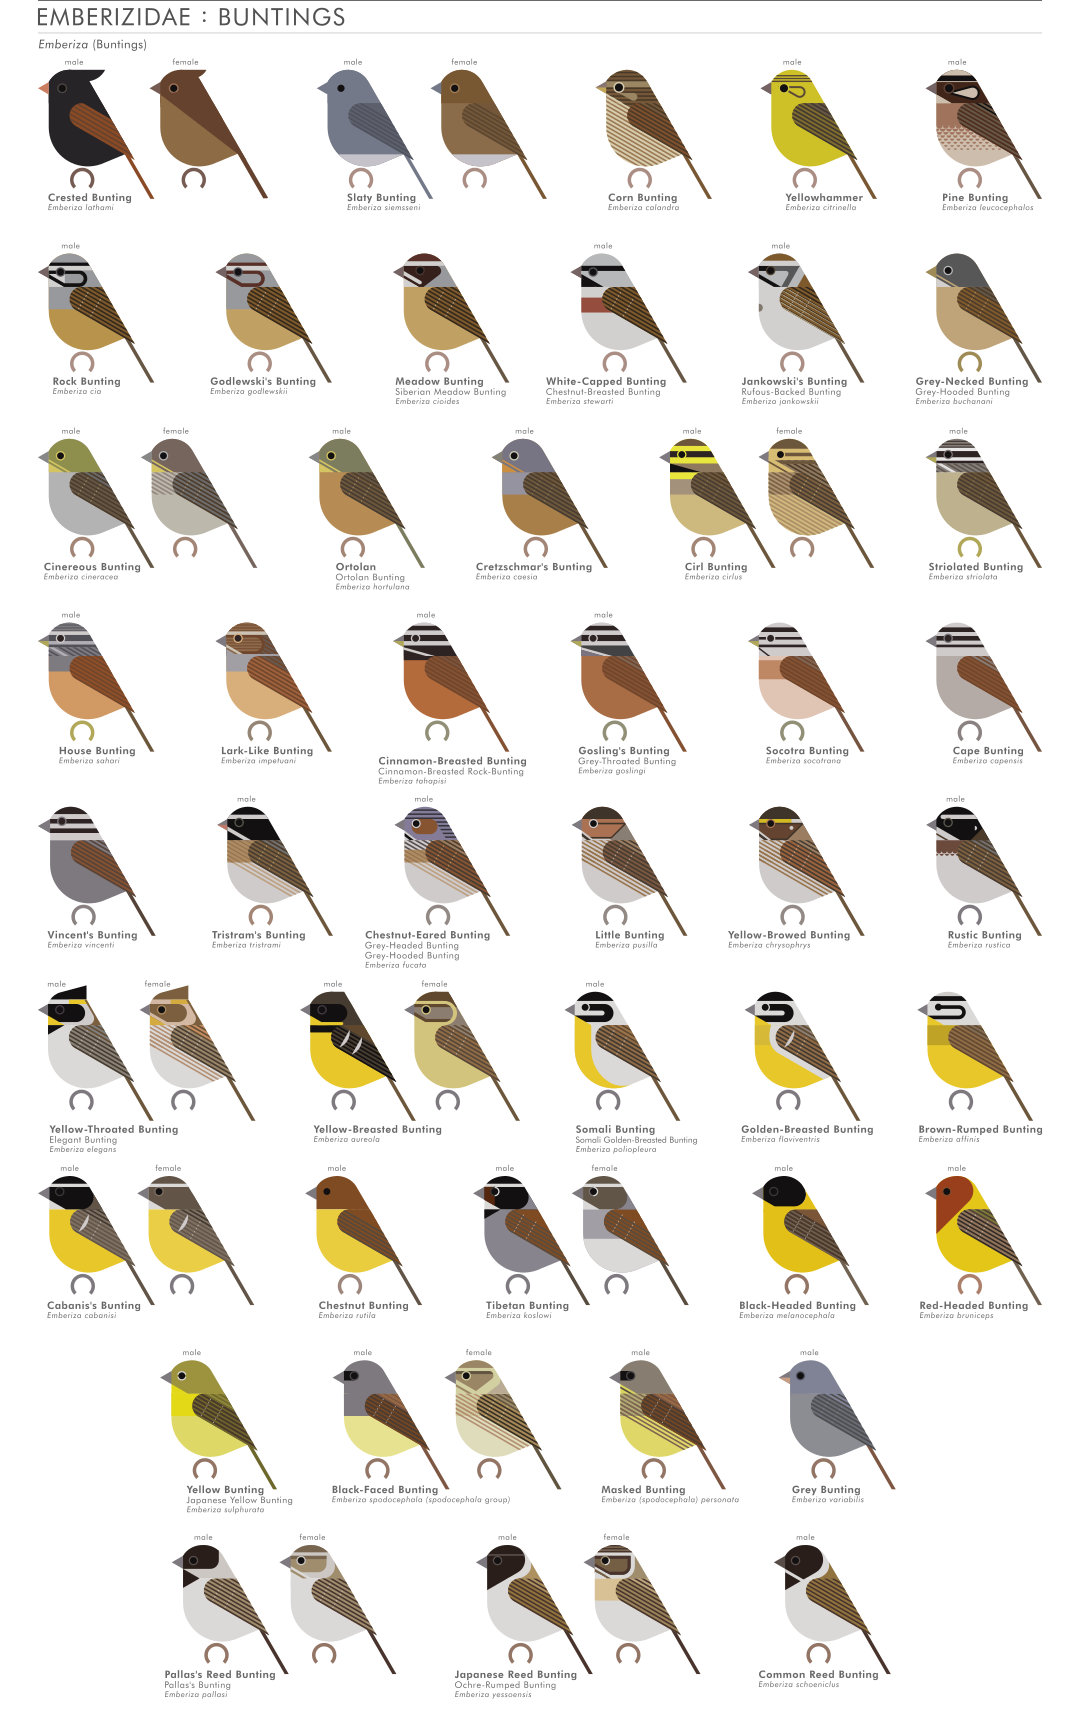 scott partridge - AVE - avian vector encyclopedia - buntings - bird vector art